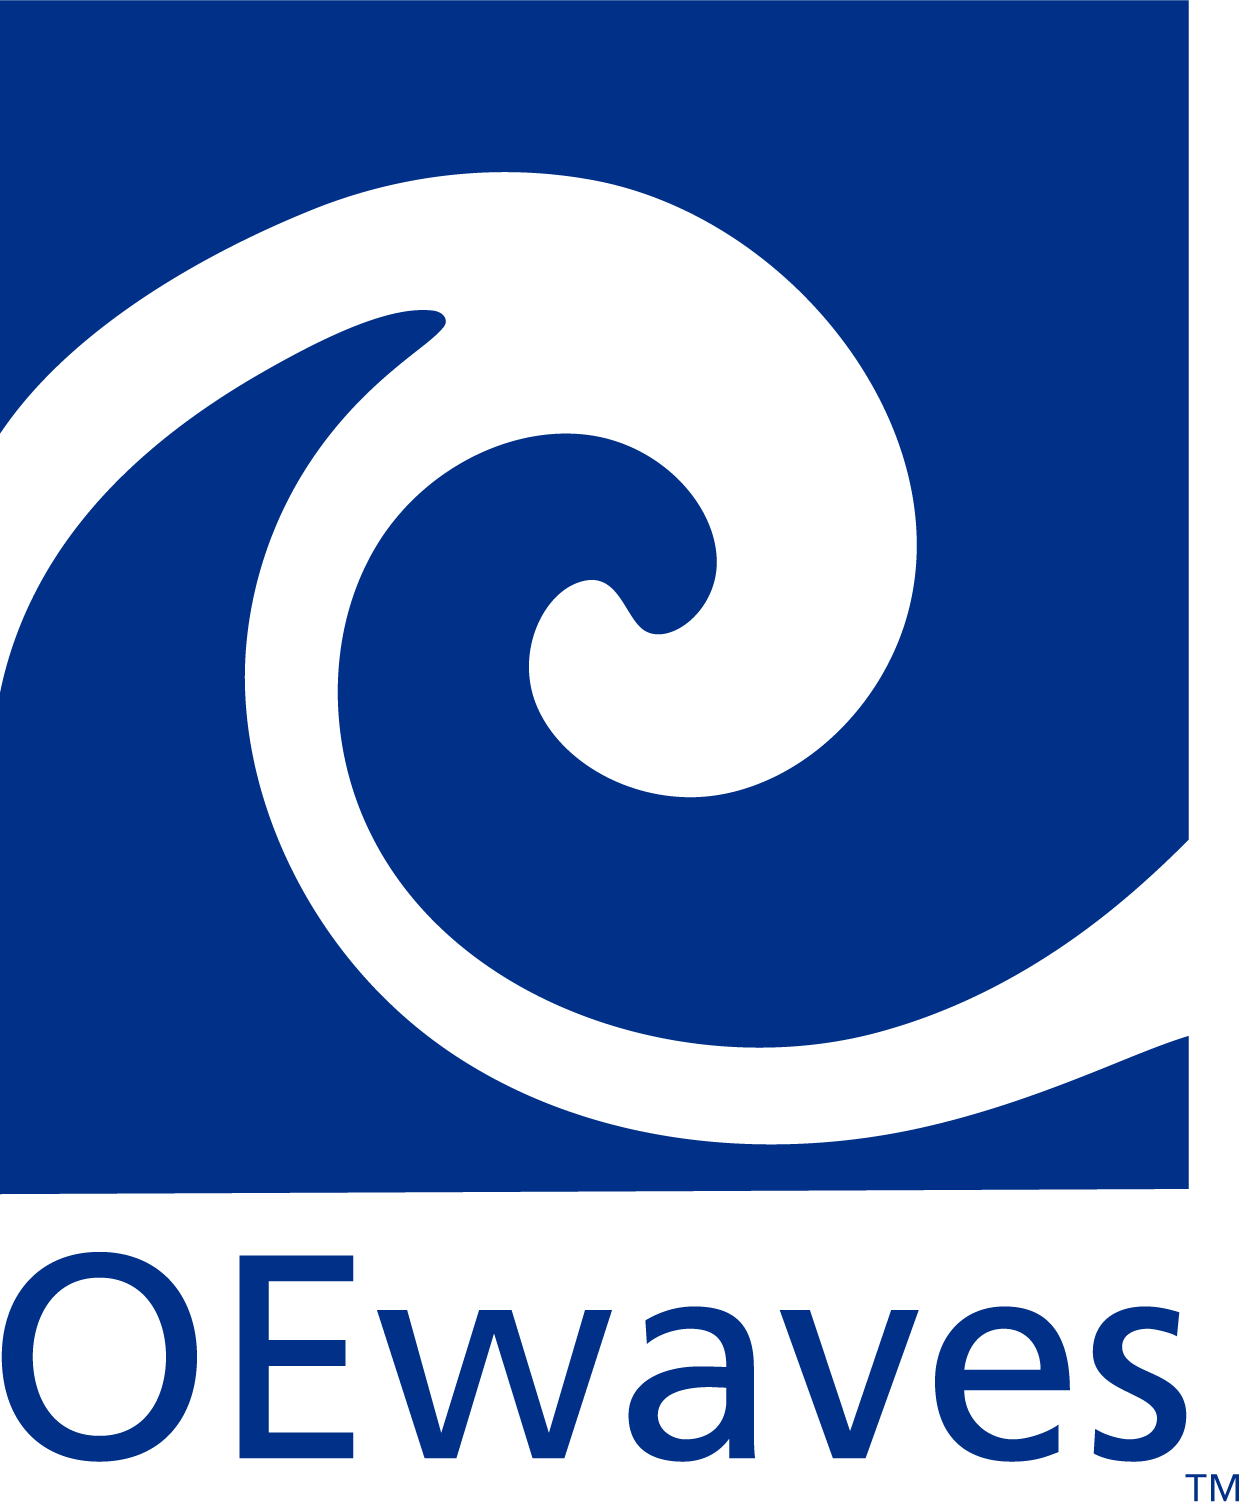 OEwaves Inc.